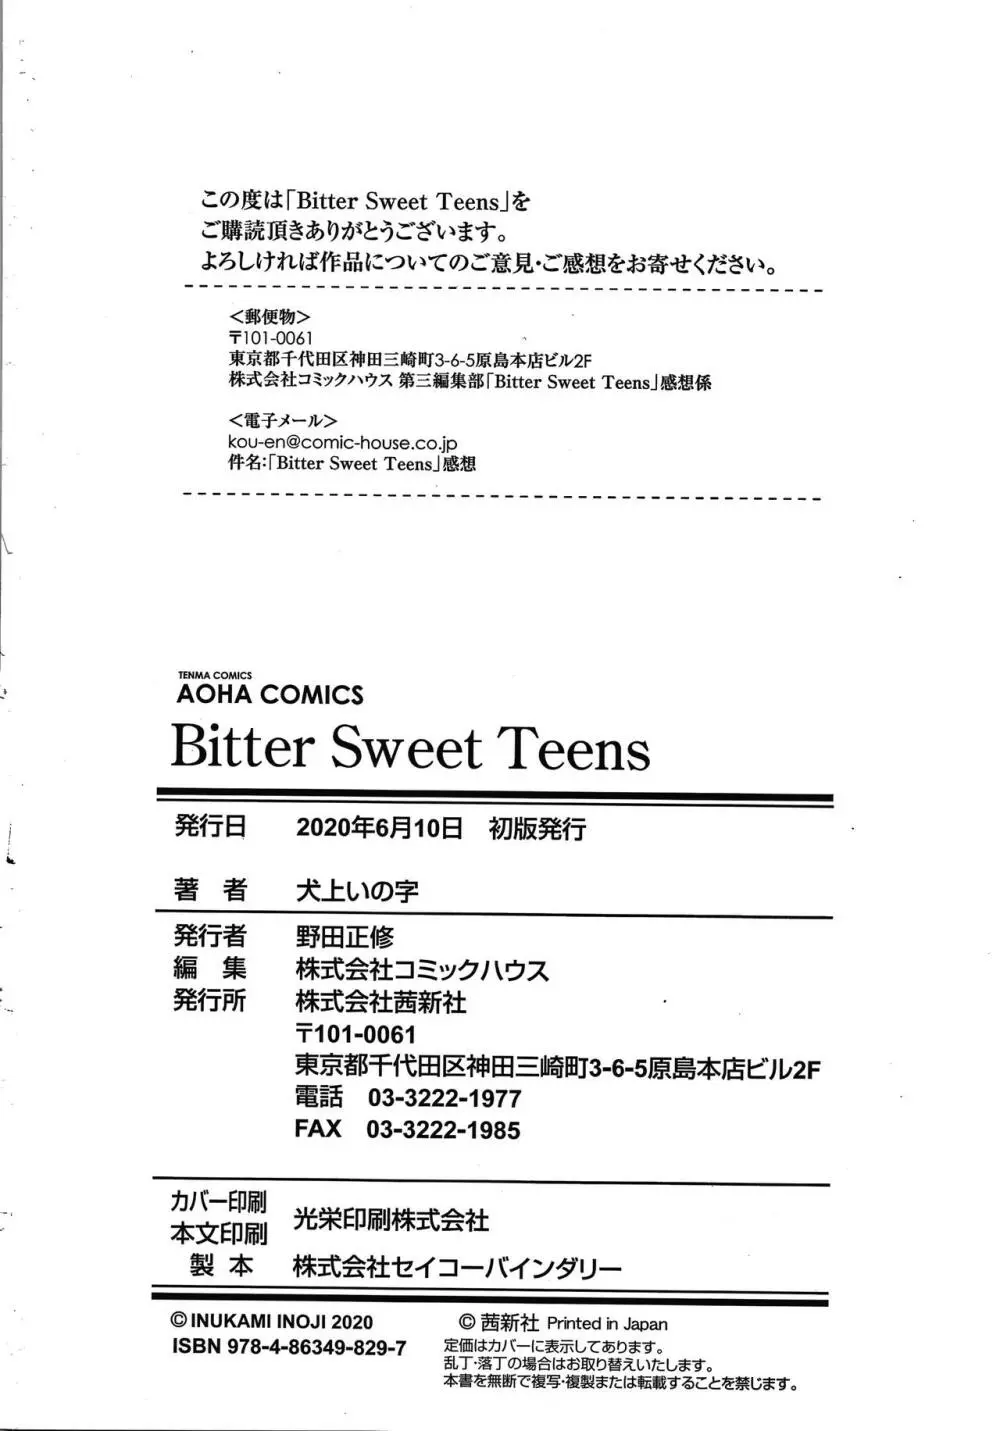 Bitter Sweet Teens + イラストカード 211ページ